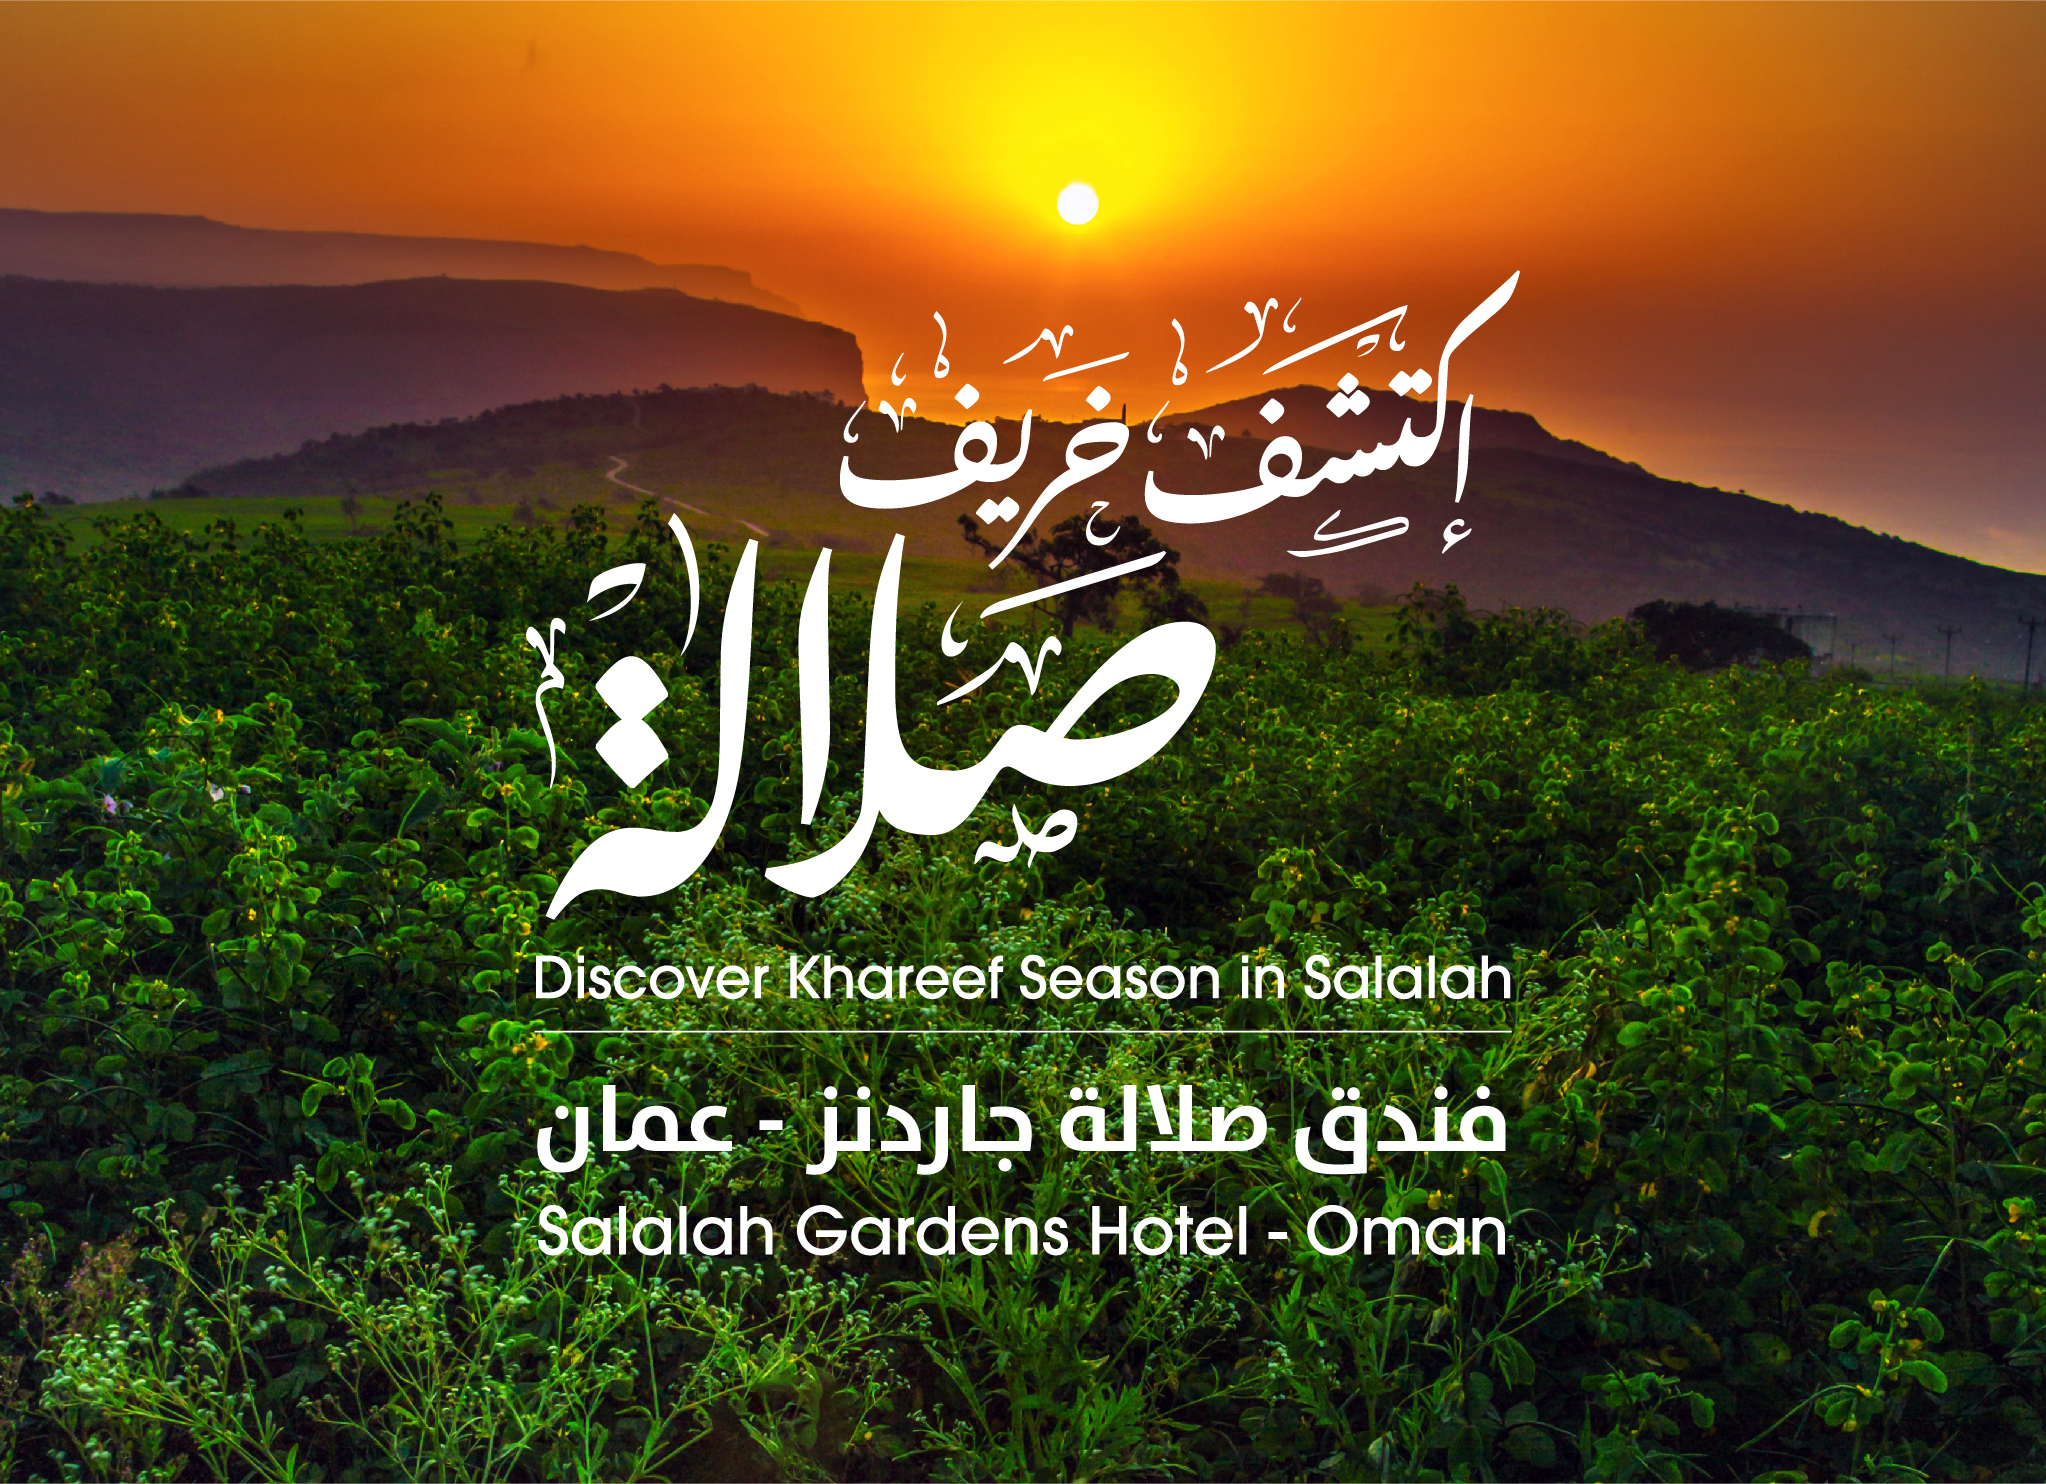 Exhilarating Adventure awaits you at Salalah Gardens Hotel during Khareef Season!